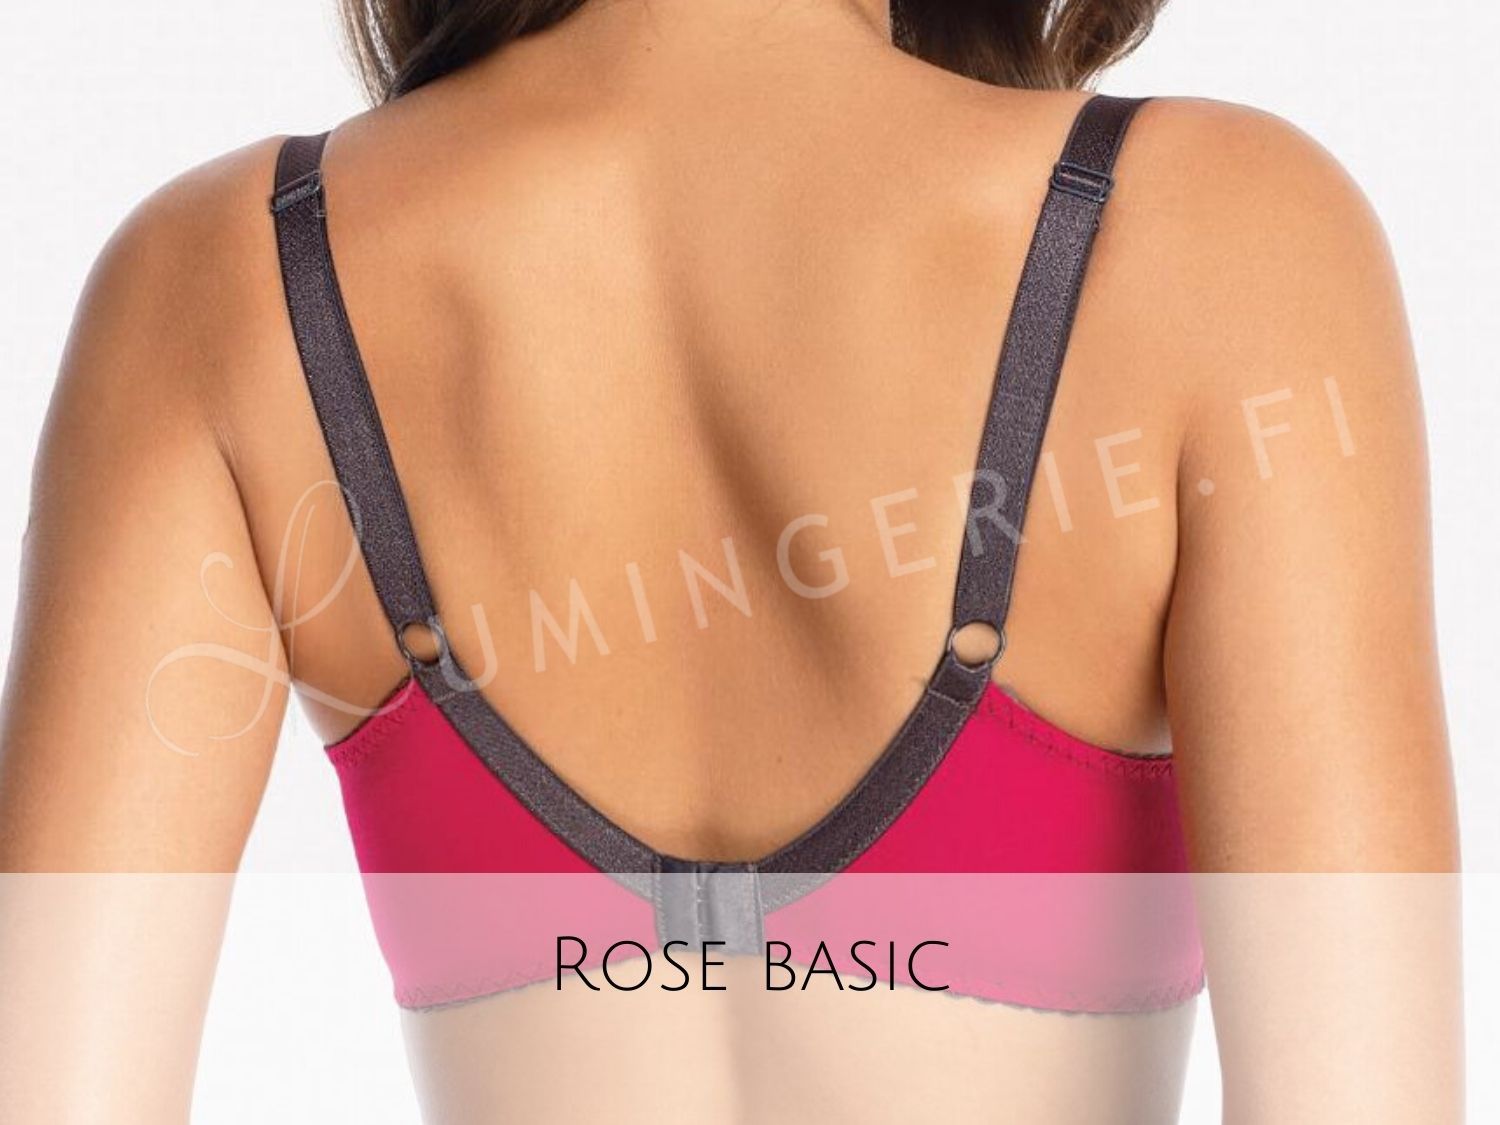  [GUTZBSY] New Upgrade Comfort Rose Bra, Rose Lace